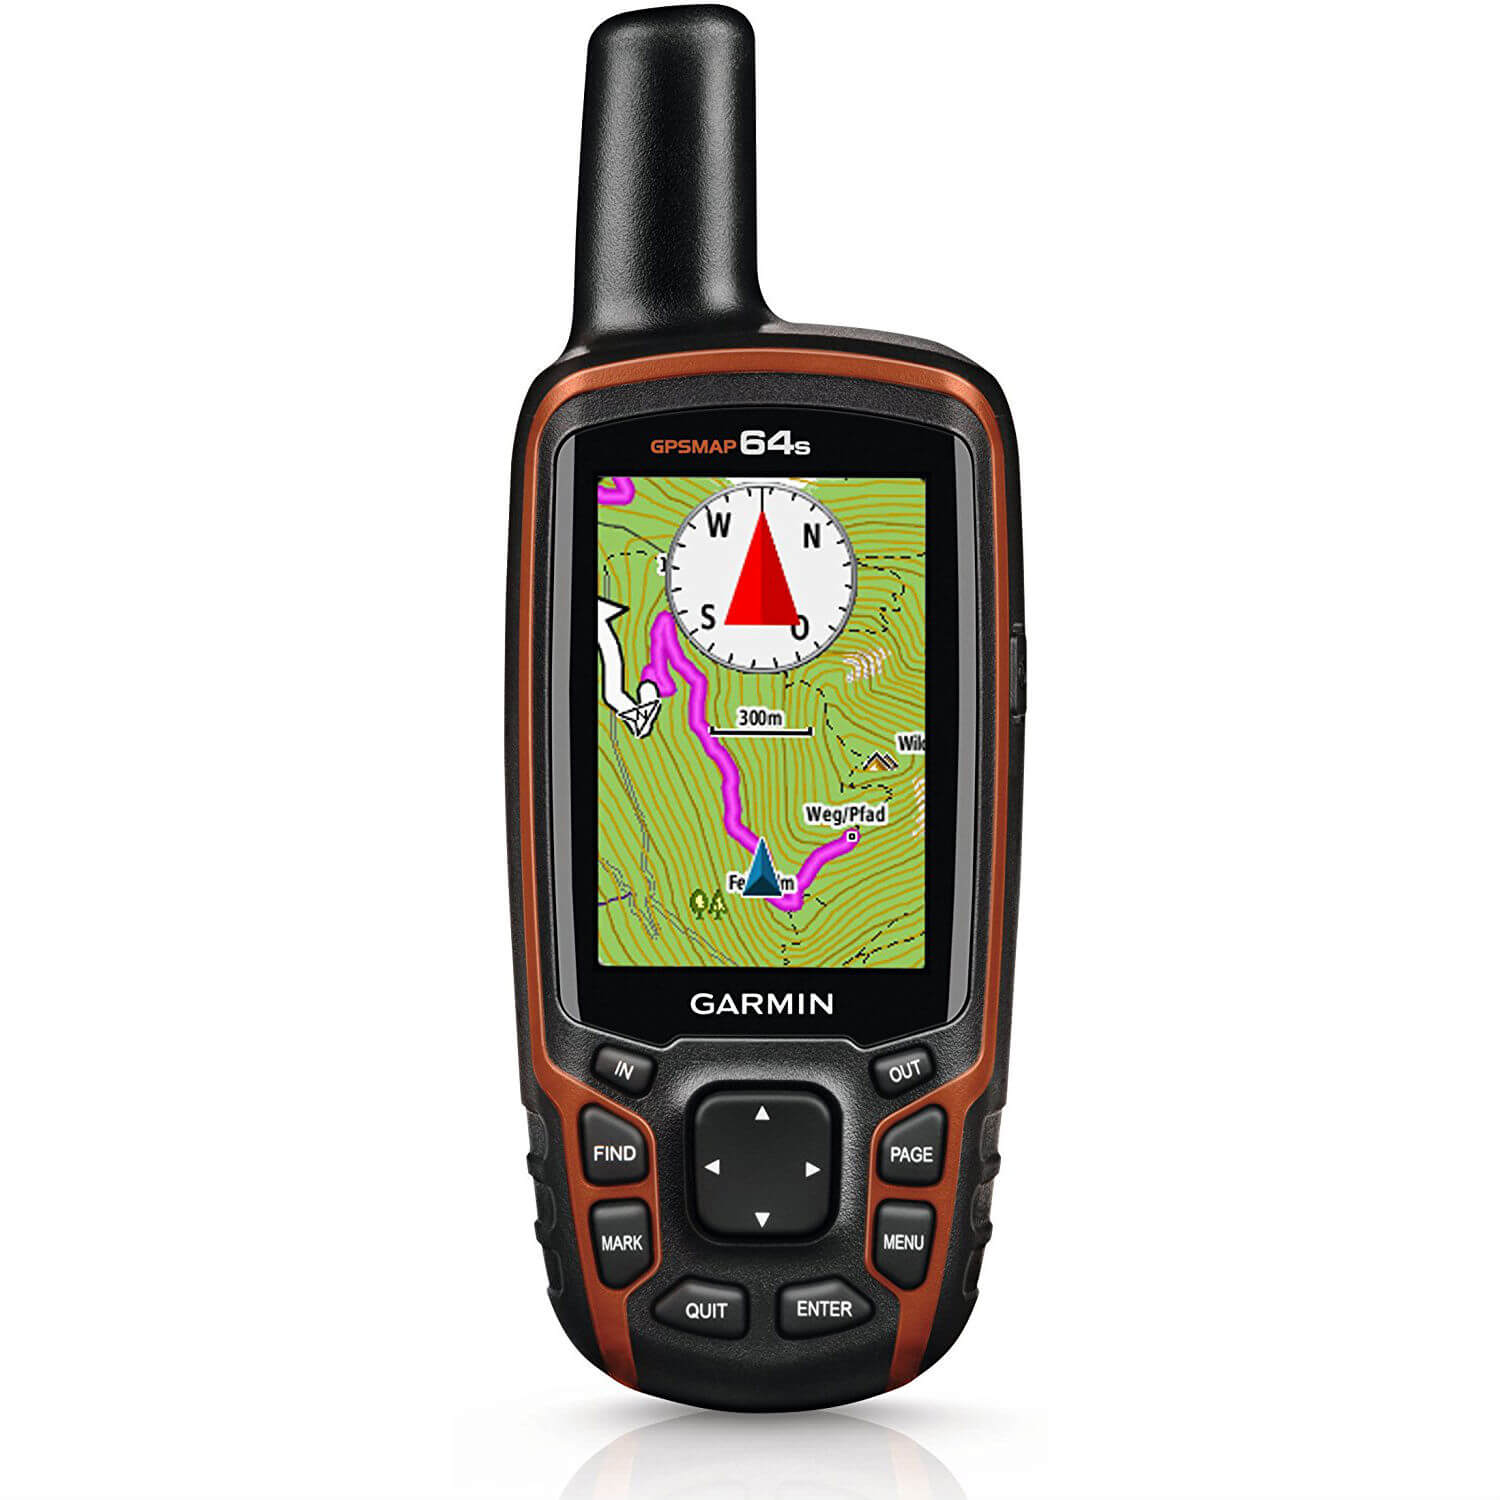 Gps навигатор garmin 64. GPS-навигатор Garmin GPSMAP 64s. GPS Garmin 64s. GPS Garmin 64. Туристический навигатор Garmin GPSMAP.